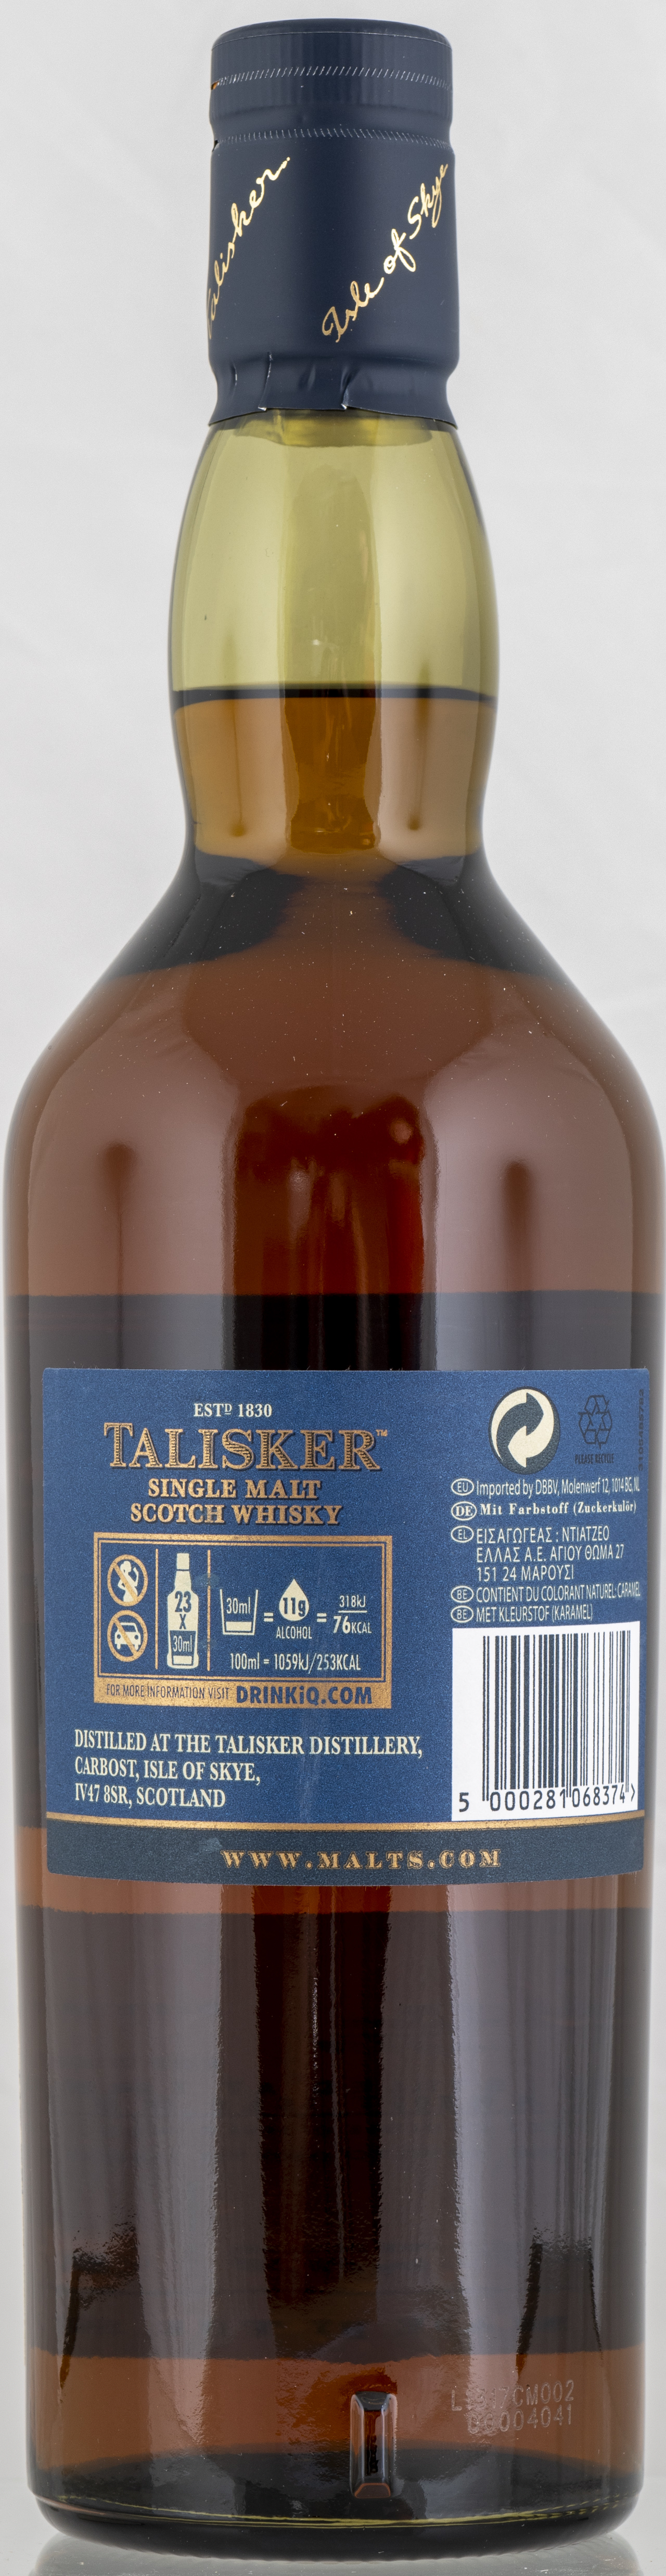 Billede: PHC_7307 - Talisker Distillers Edition TD-S 5XJ - bottle back.jpg